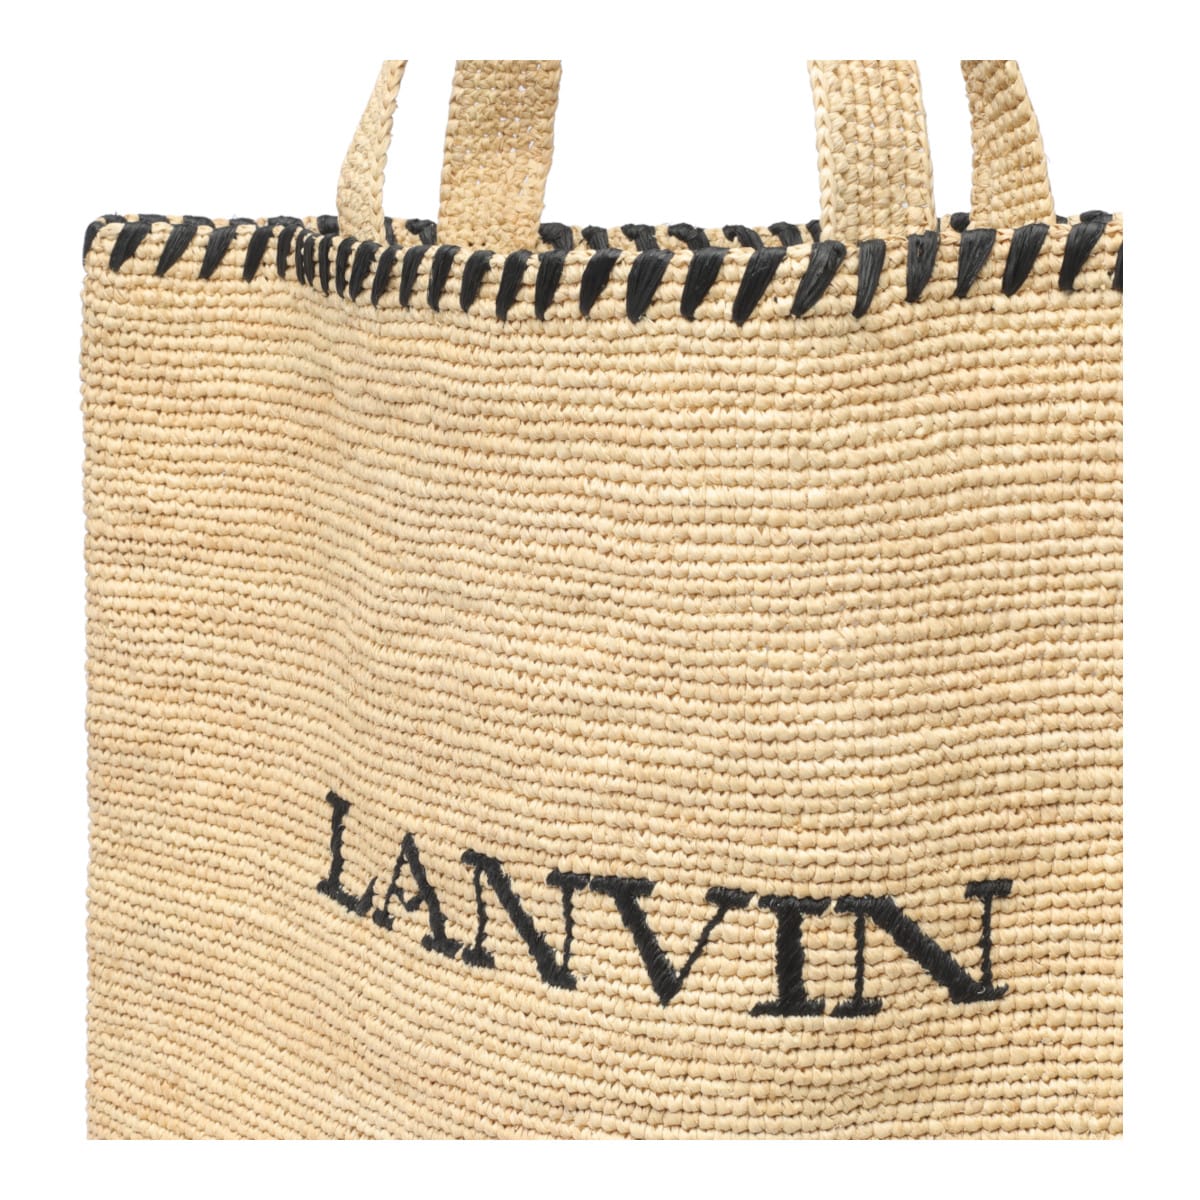 Shop Lanvin Tote Bag In Beige